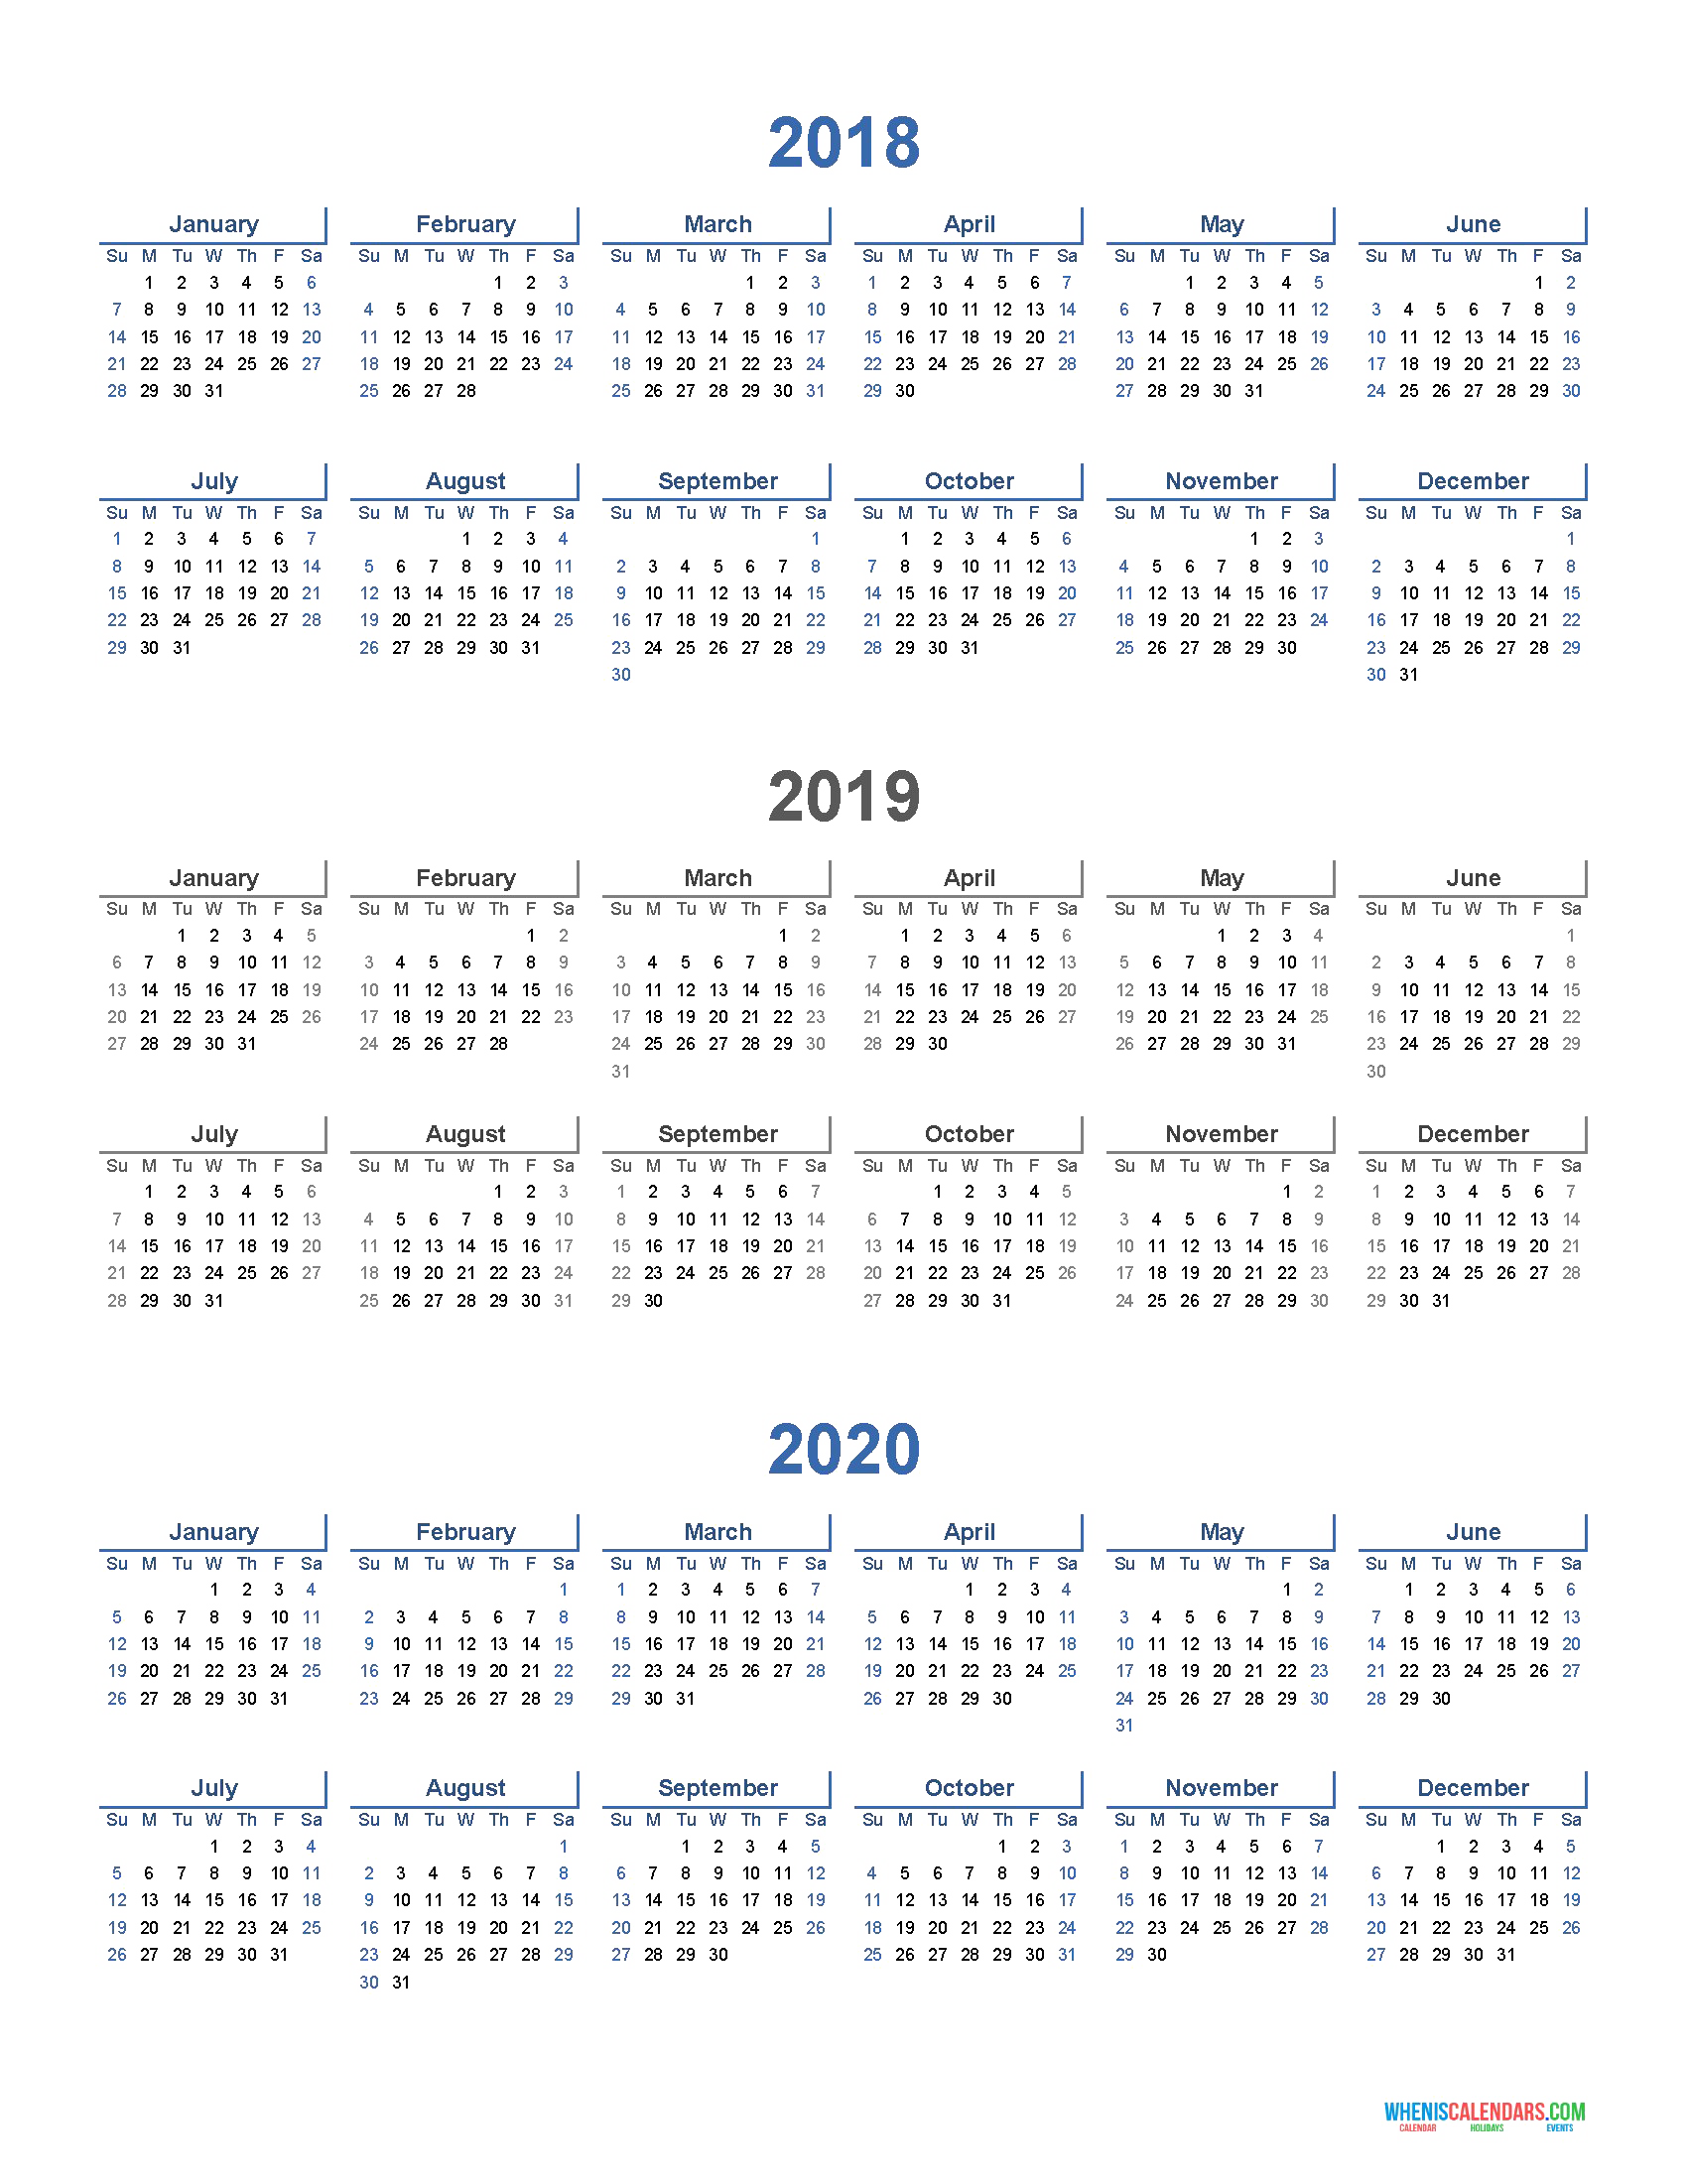 2020 Calendar PNG Transparent Picture SVG Clip arts